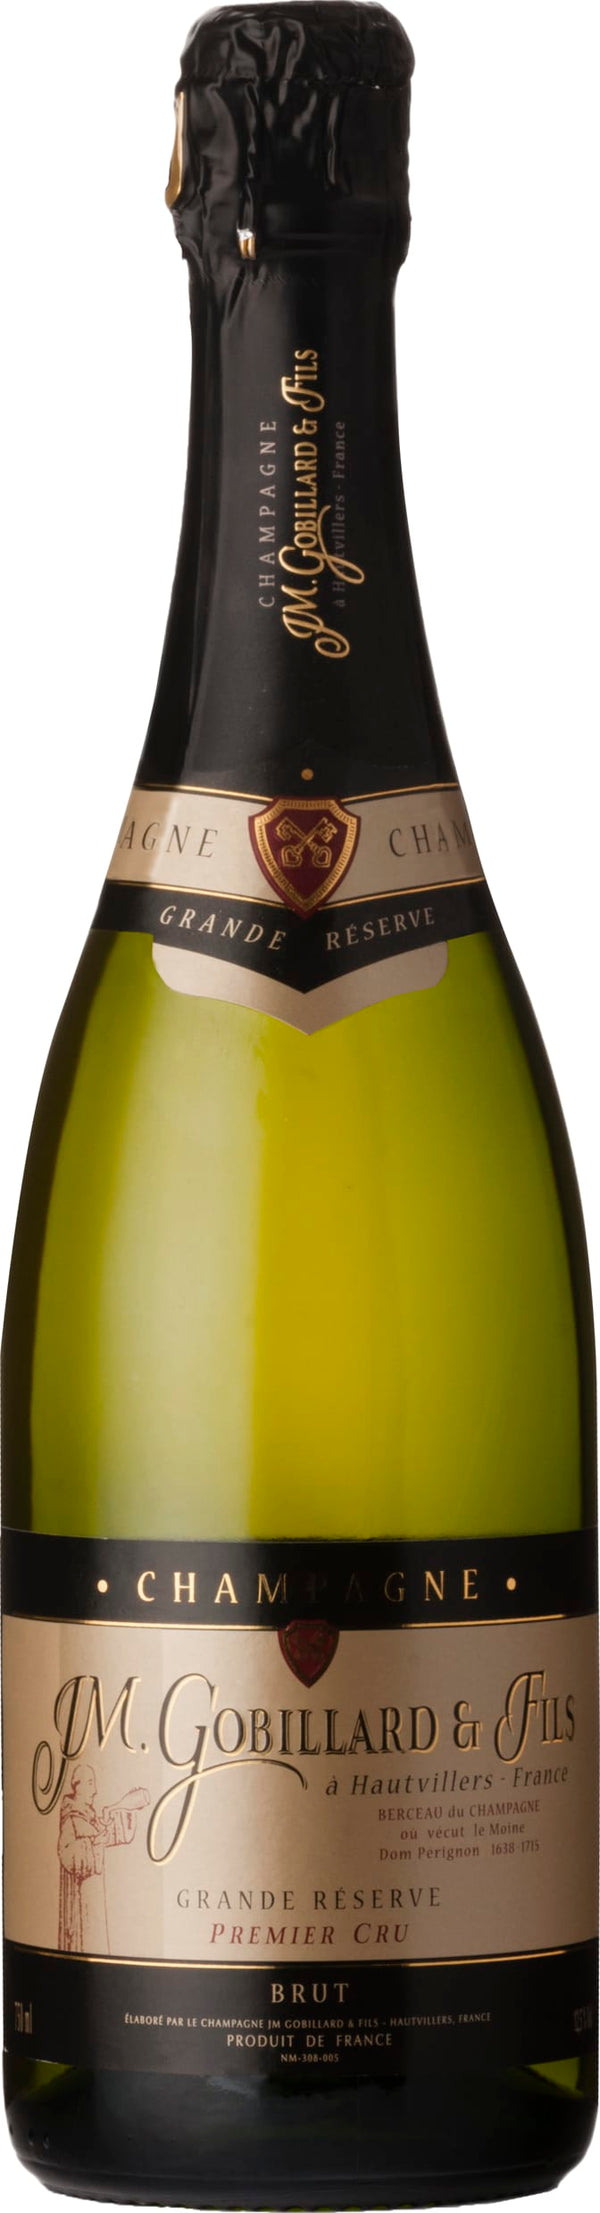 Gobillard Champagne Brut Grande Reserve Premier Cru NV6x75cl - Just Wines 